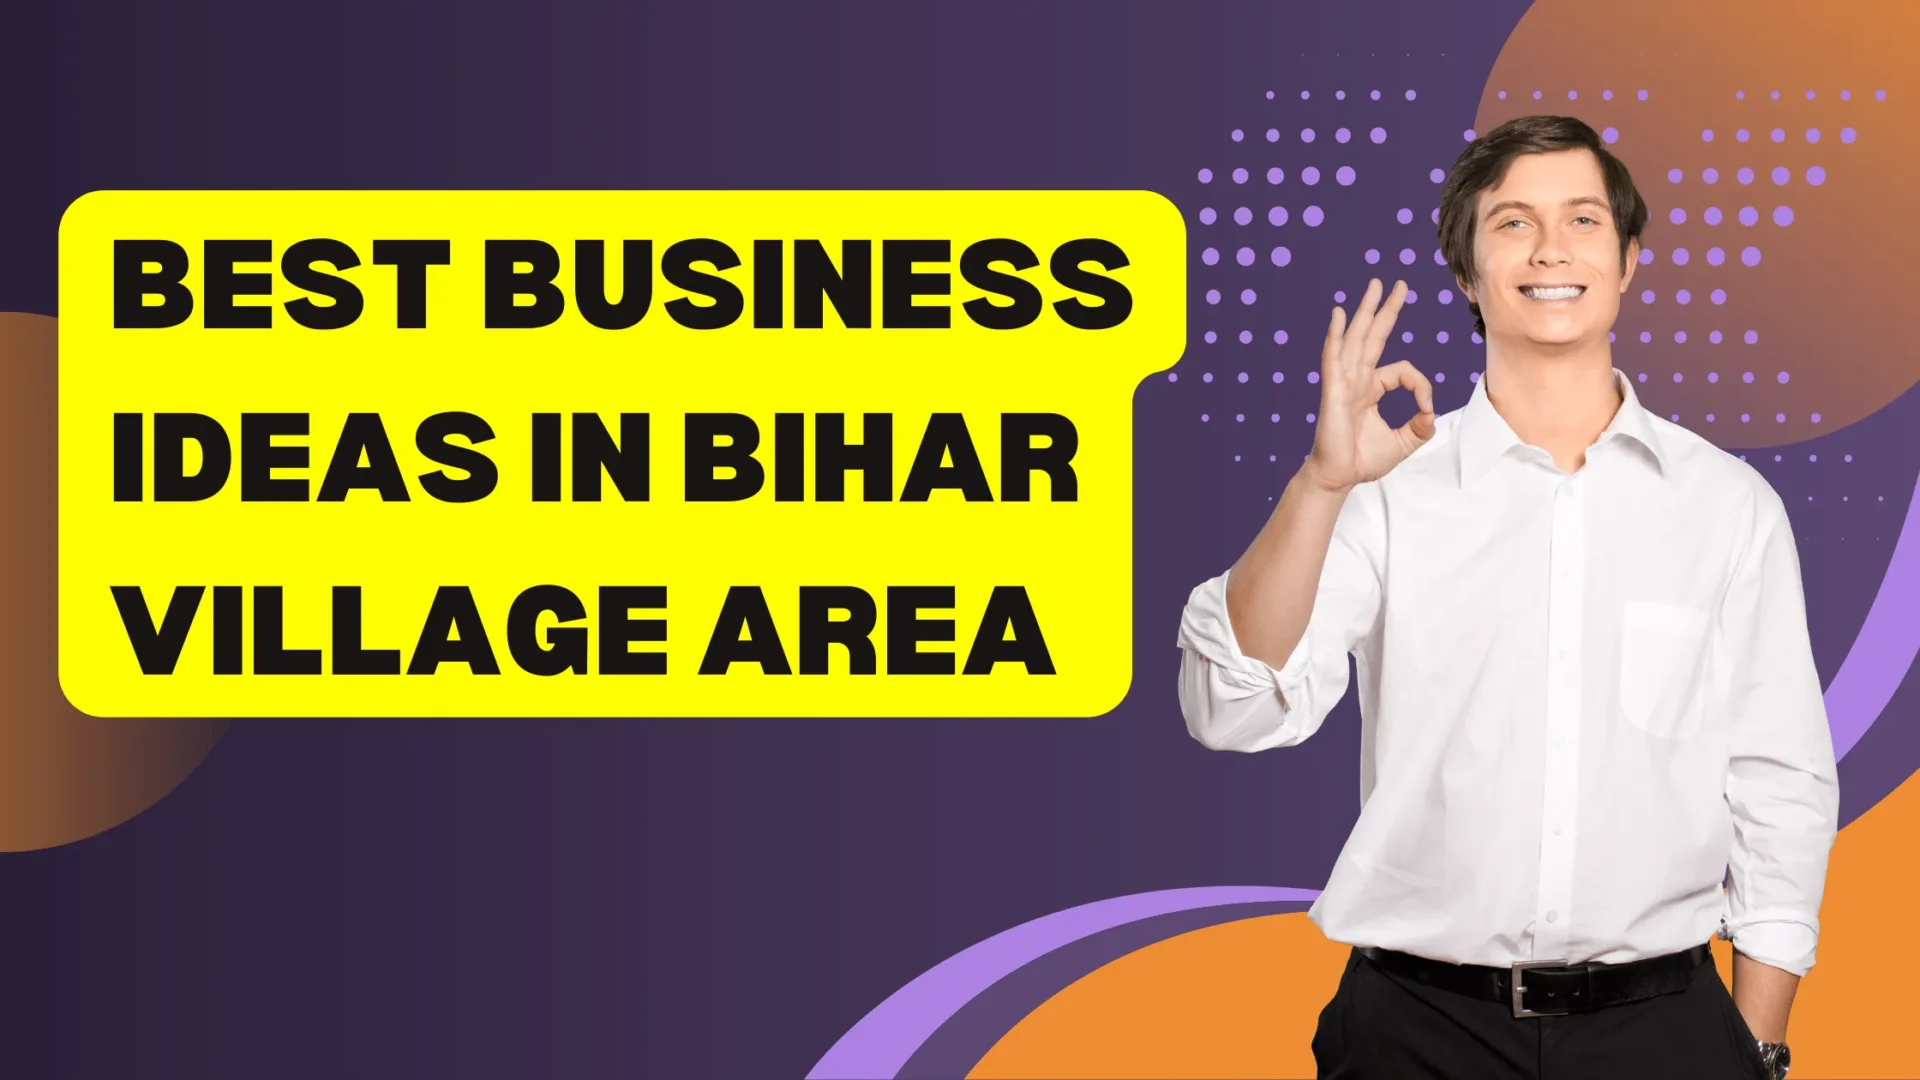 Best Business Ideas In Bihar Village Area